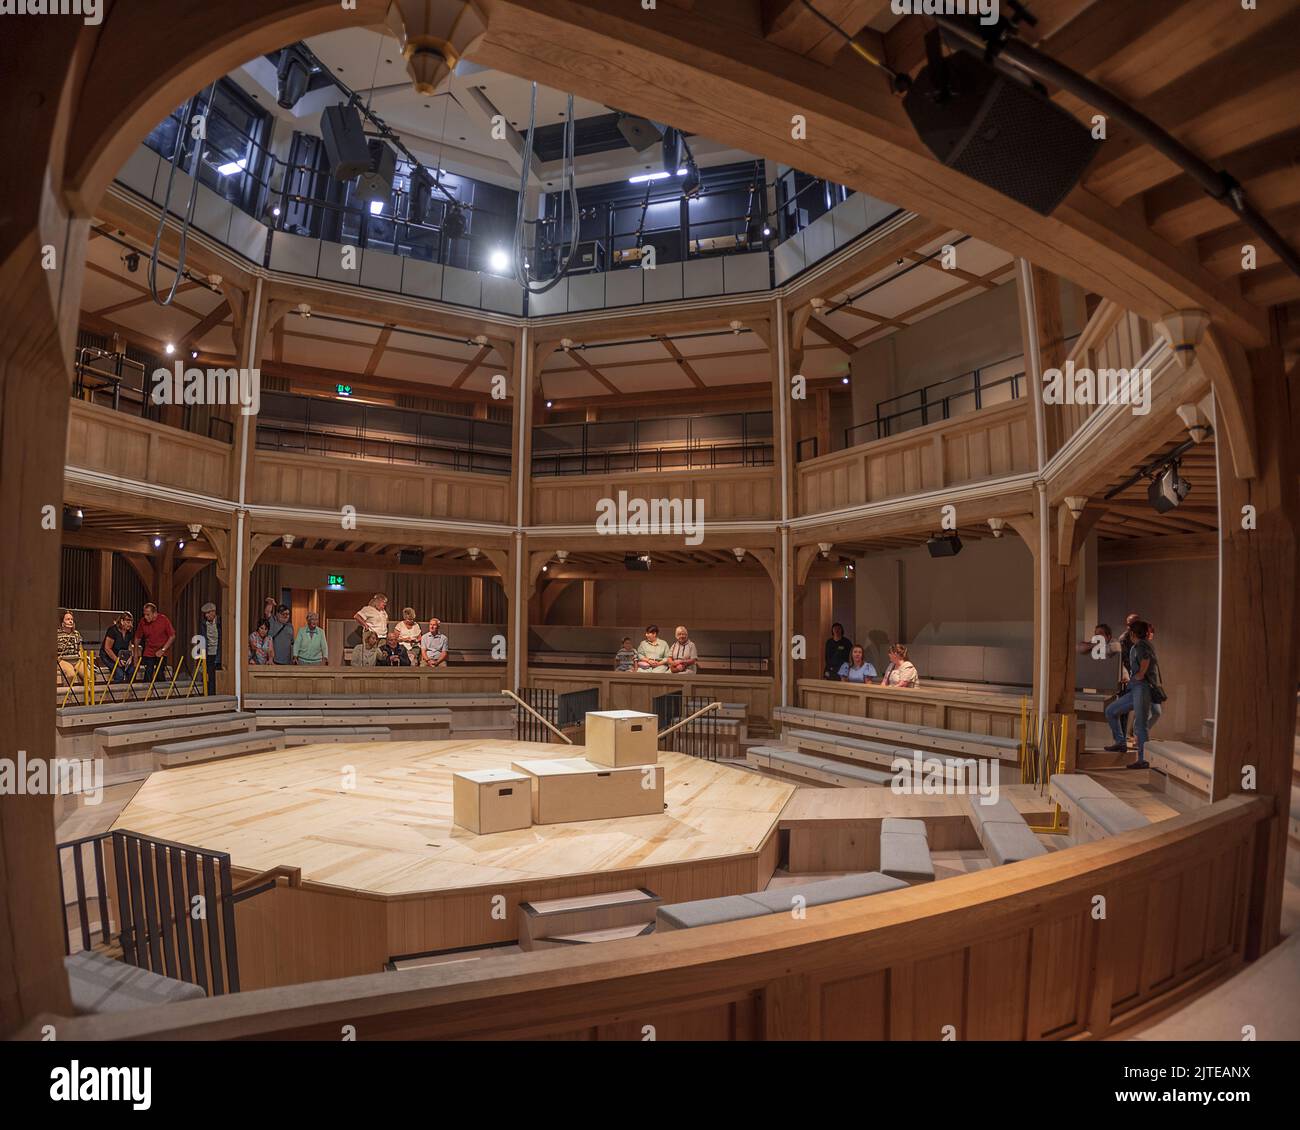 The Shakespeare North theatre in Prescot, Merseyside. The all wooden theatre in the round audirorium. Stock Photo